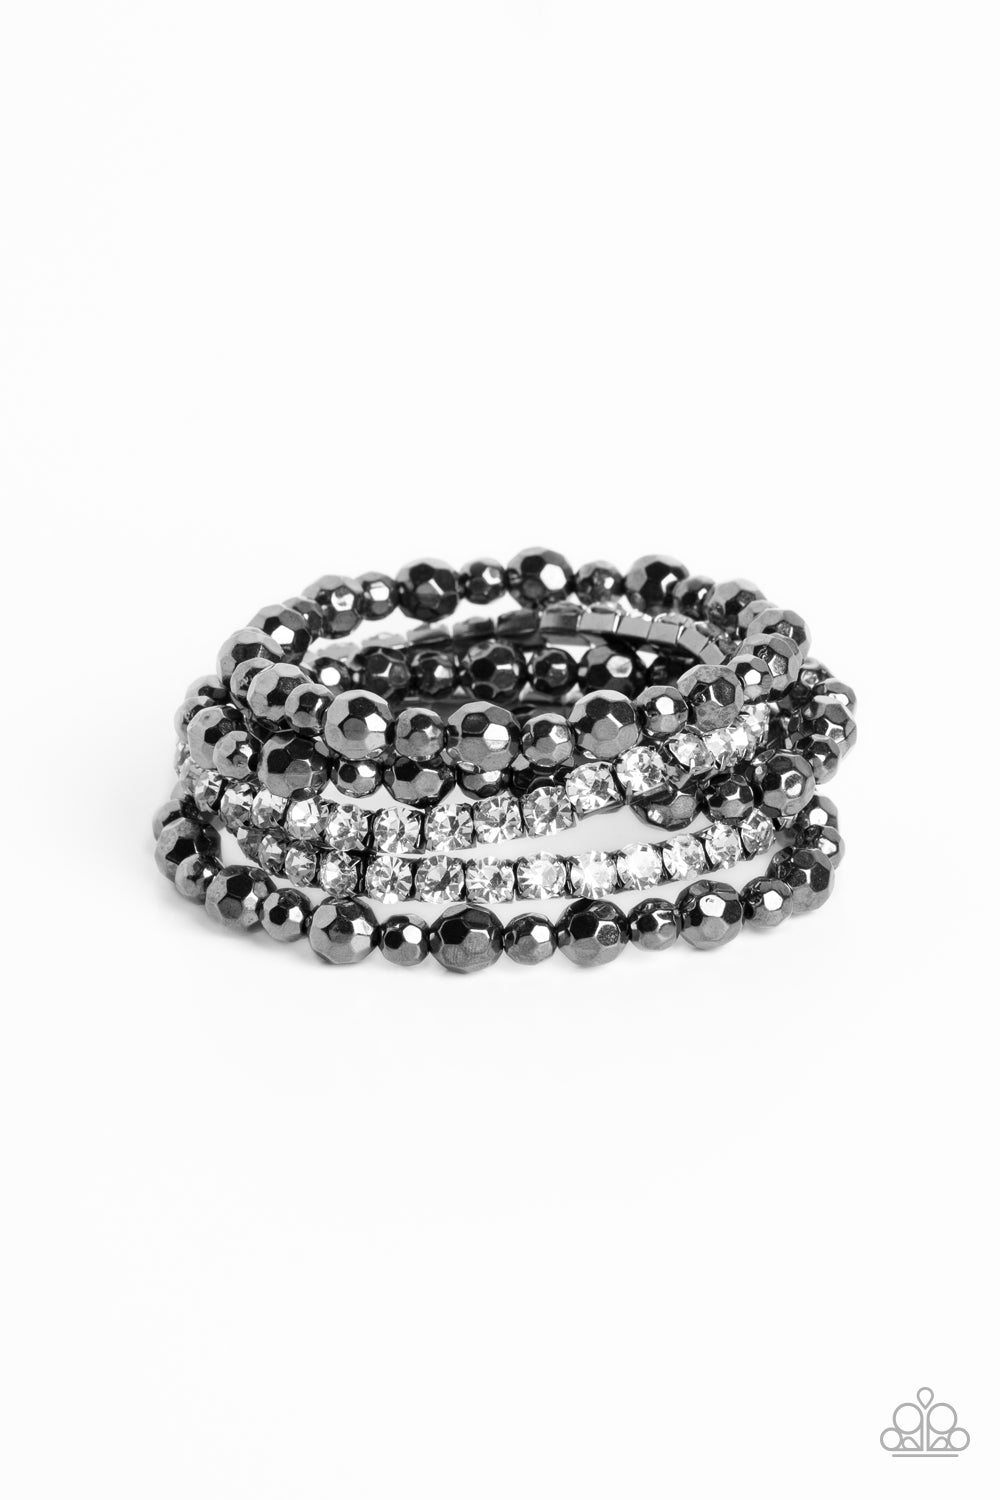 Top Notch Twinkle Black Bracelet - Paparazzi Accessories- lightbox - CarasShop.com - $5 Jewelry by Cara Jewels